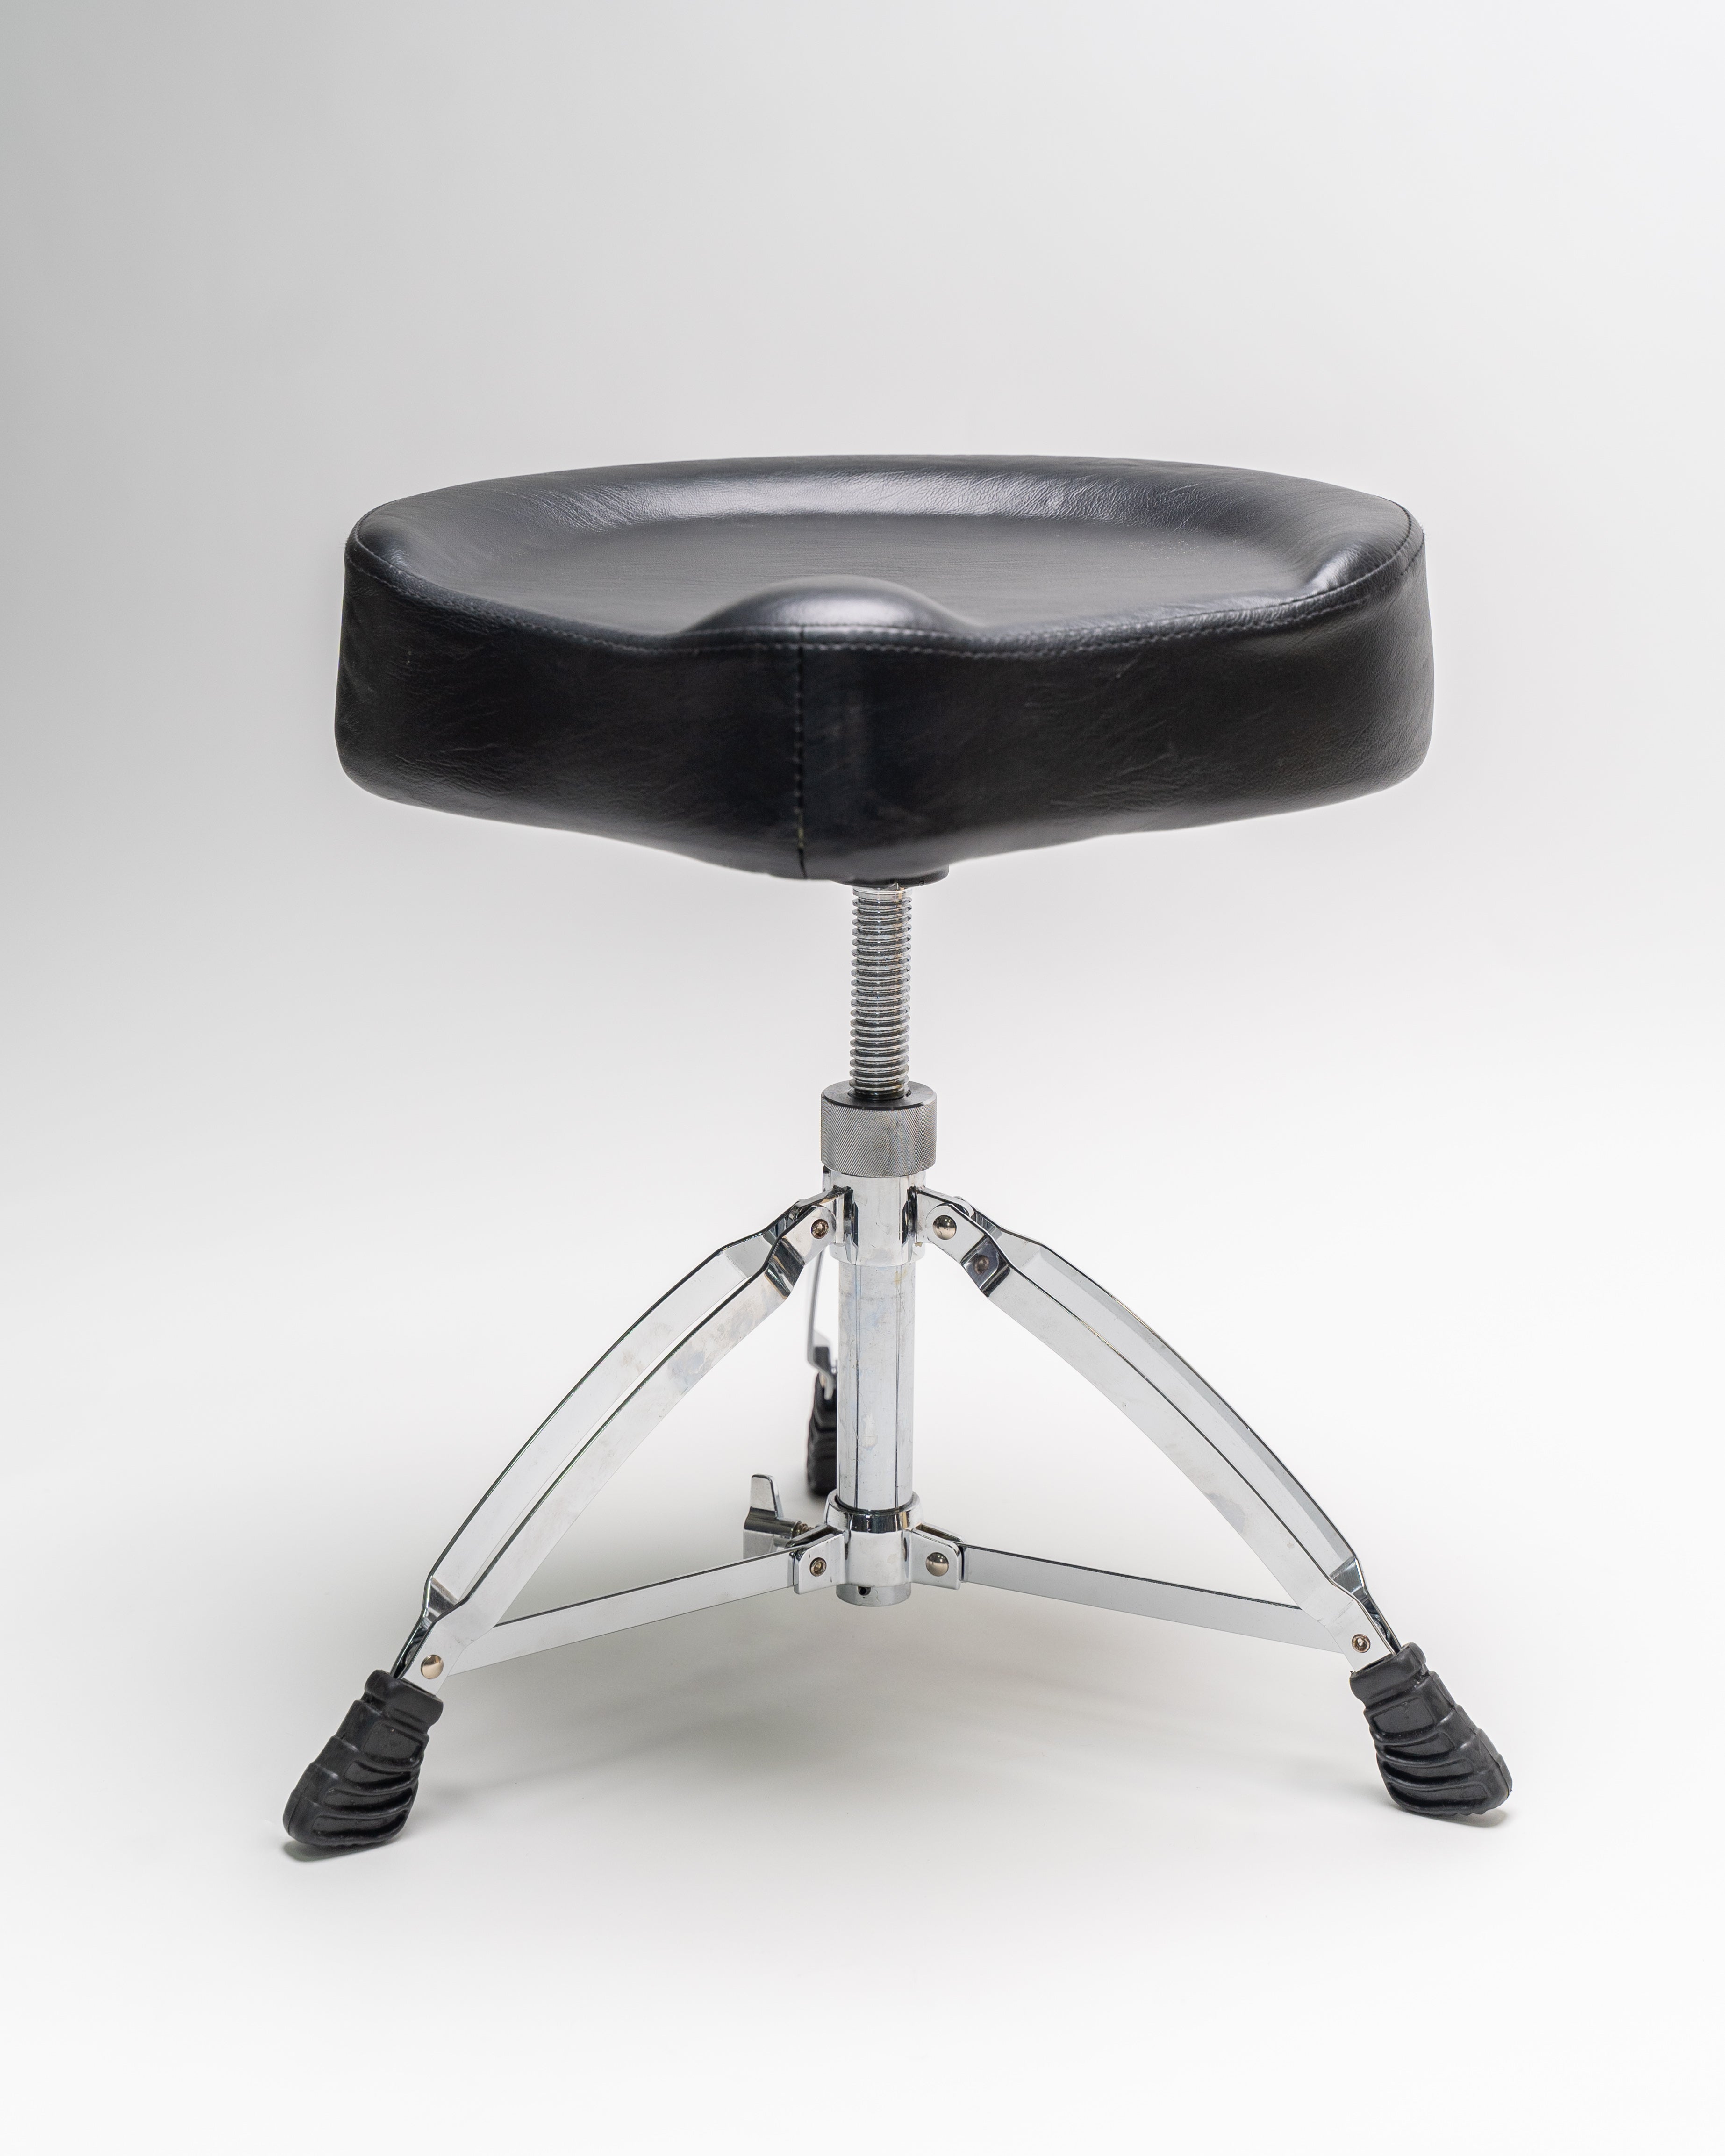 Adjustable Drum Throne, Padded Stool Motorcycle Style Drum Chair